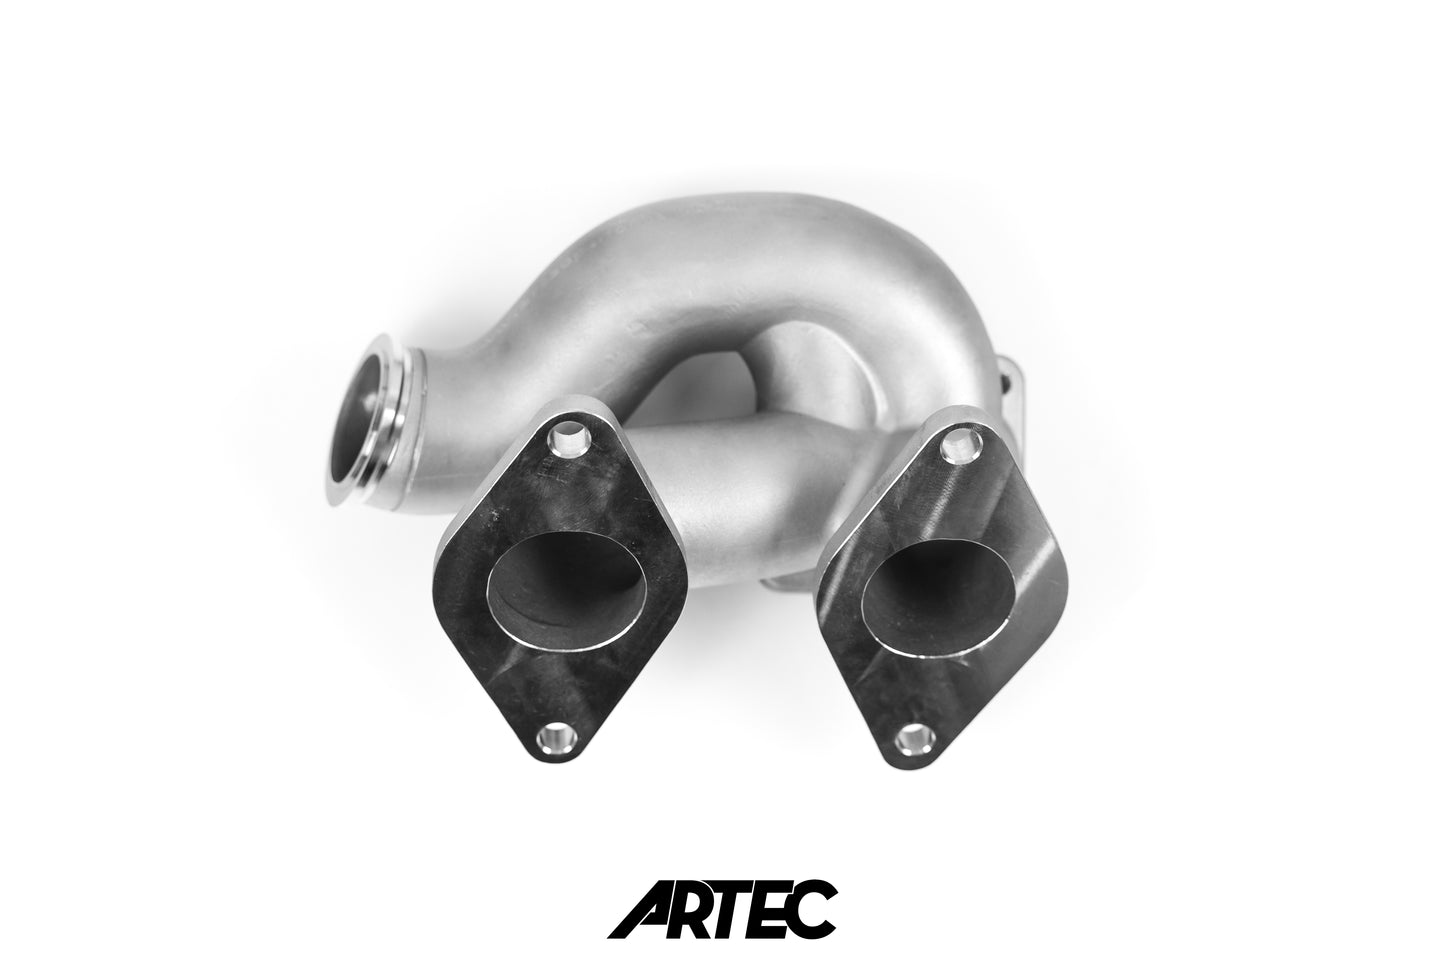 Artec Mazda 13B T4-Turbo Exhaust Manifold (preorder)